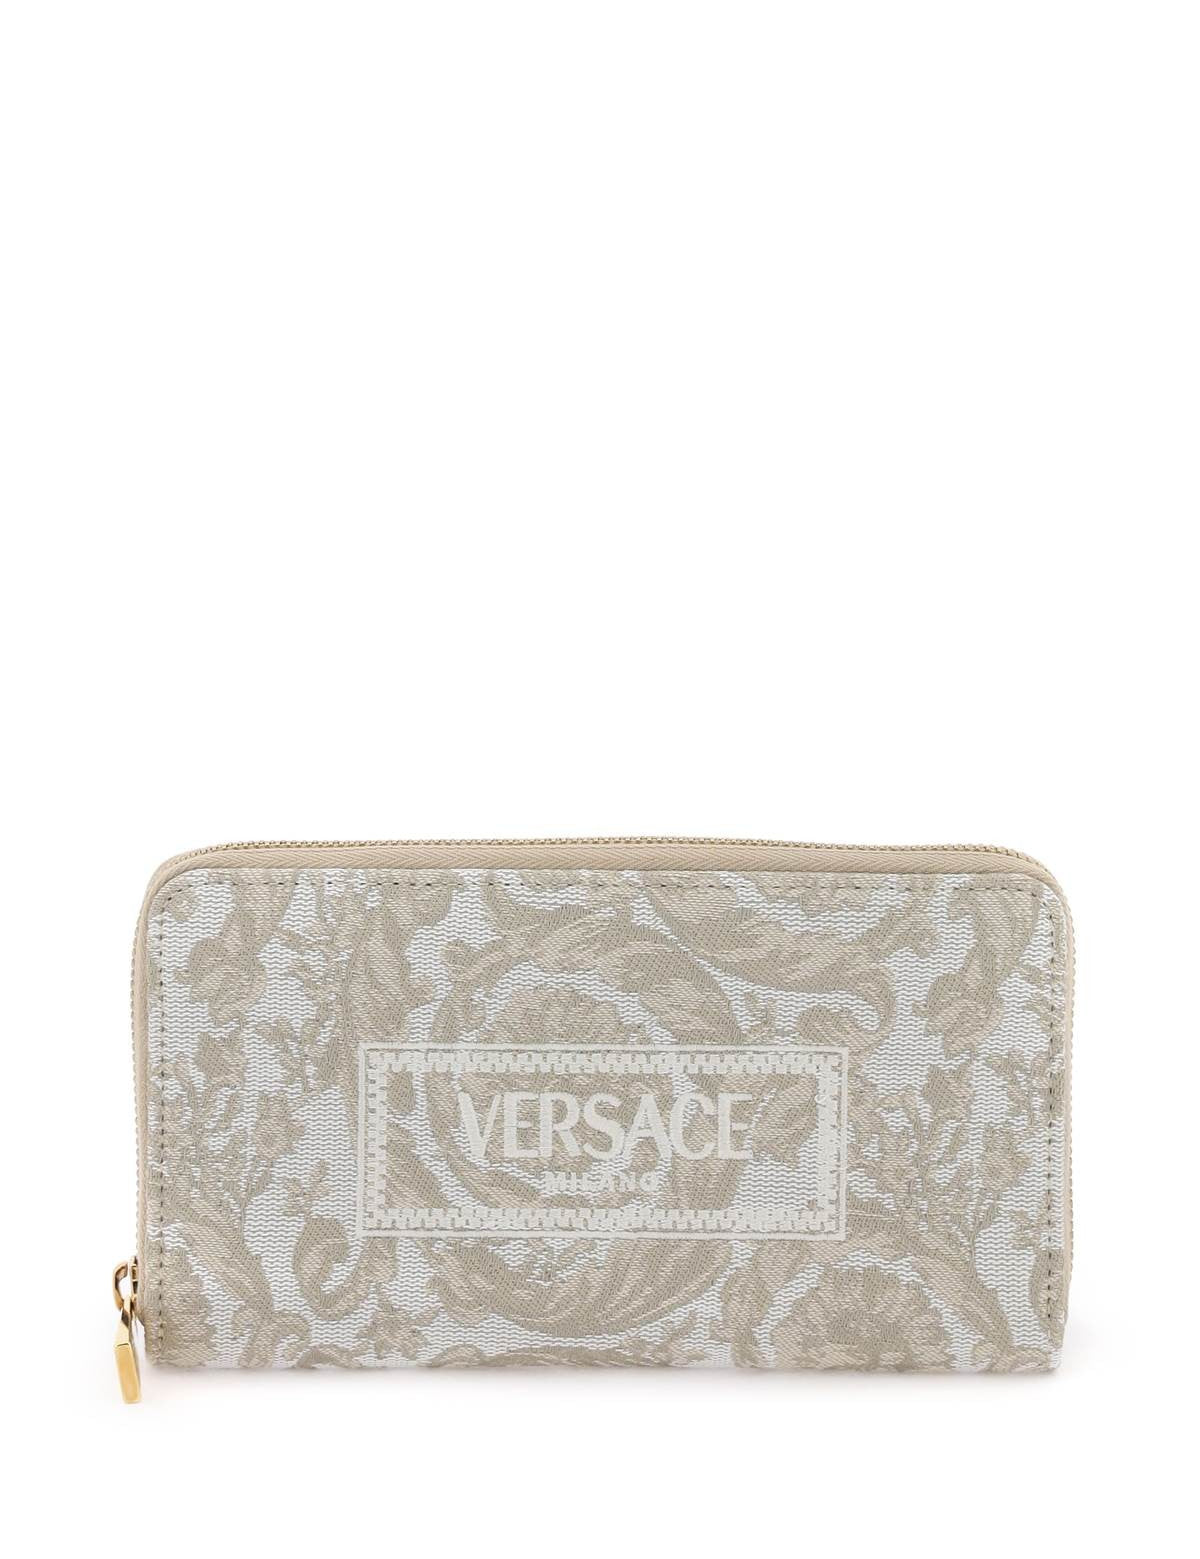 versace-barocco-long-wallet.jpg